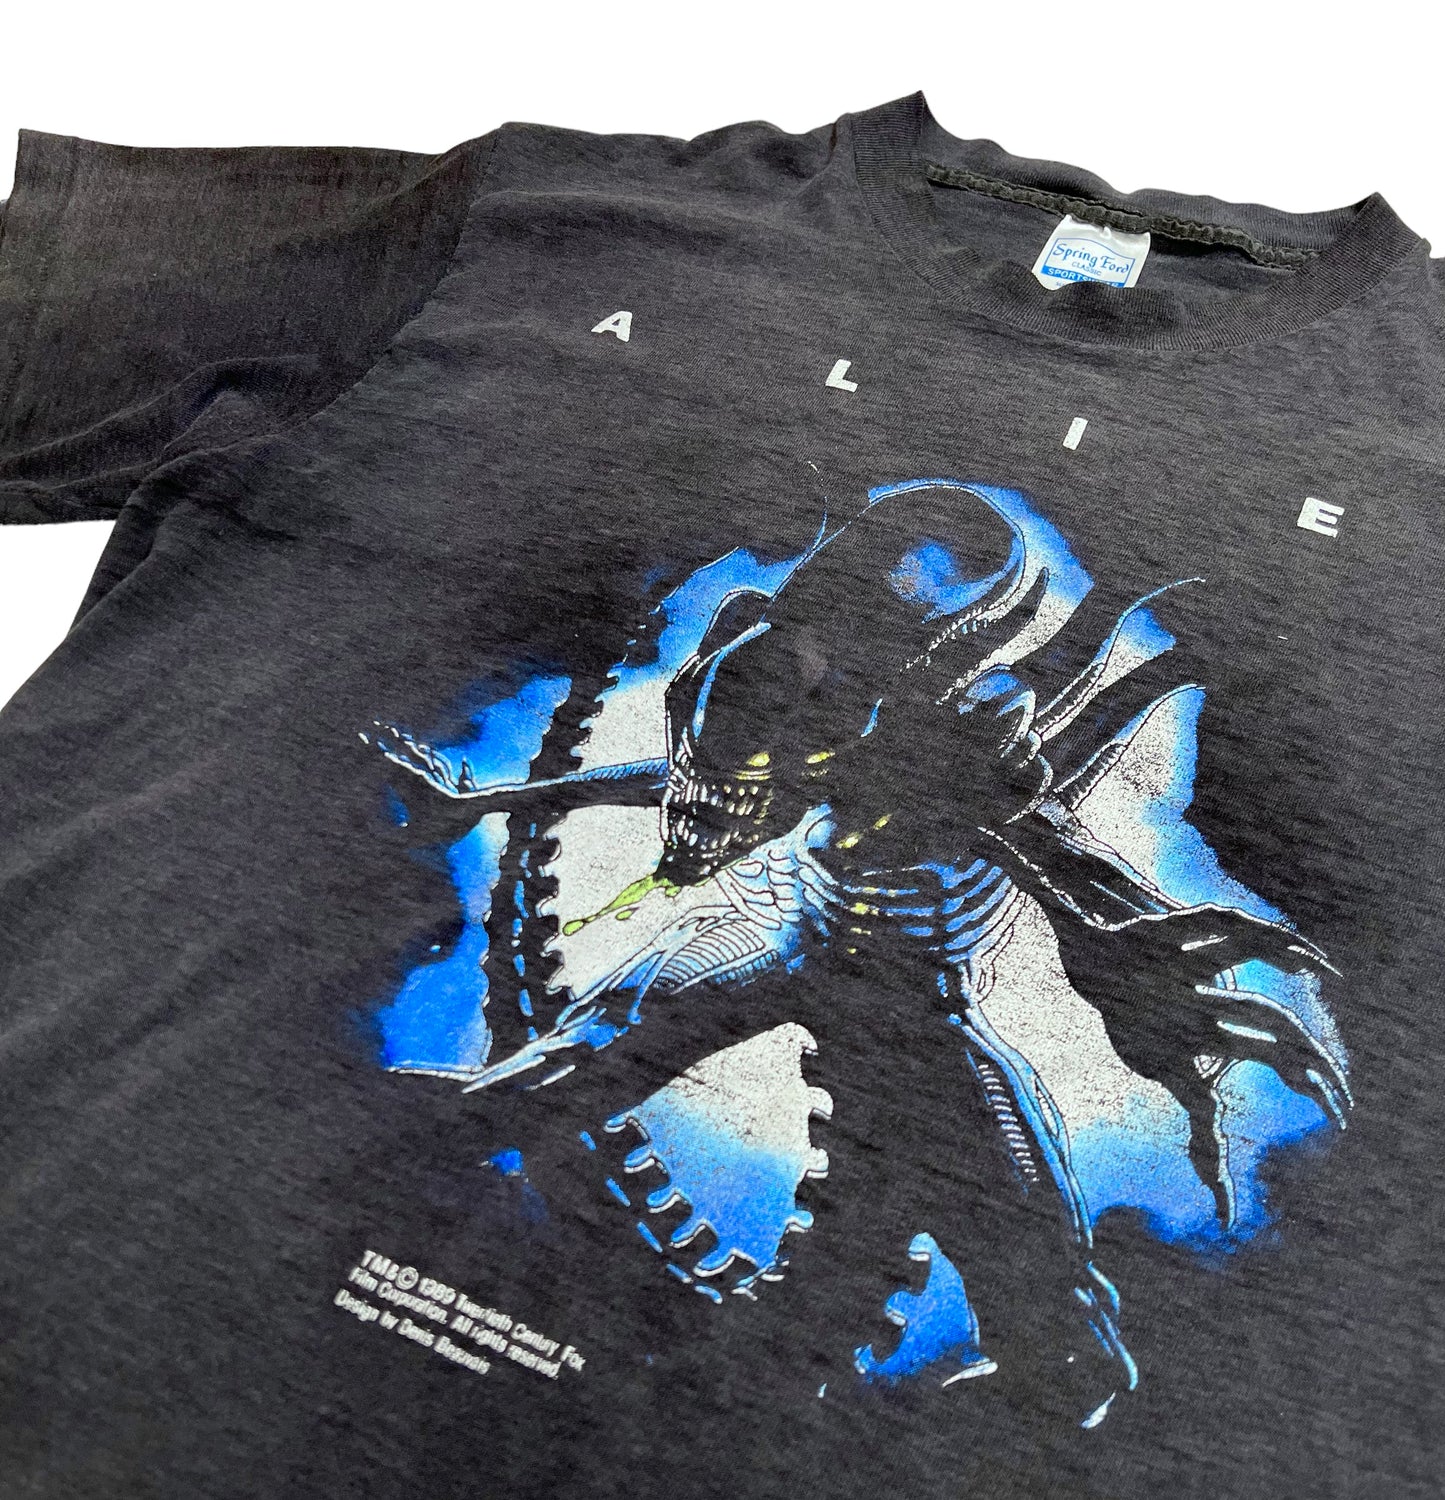 1989 Alien movie promo t-shirt